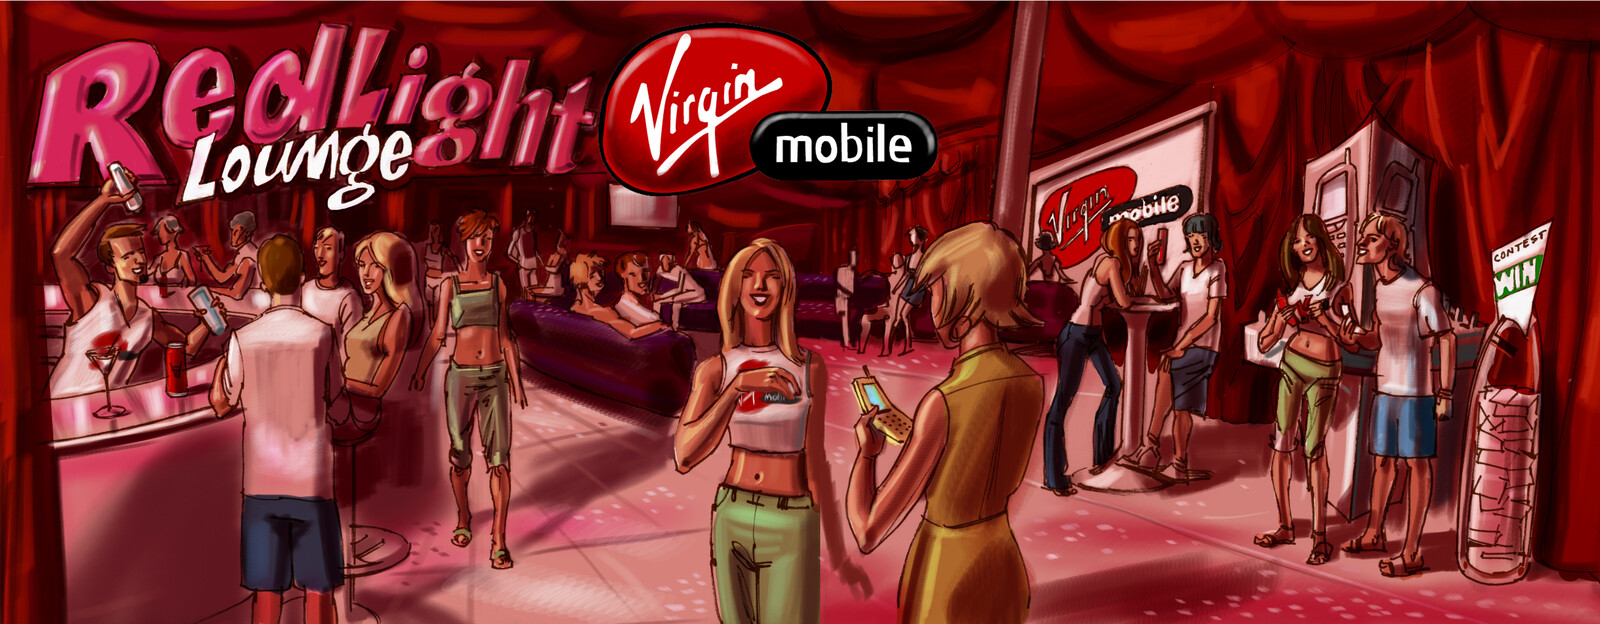 Concept Illustration for Molson/Virgin Mobile